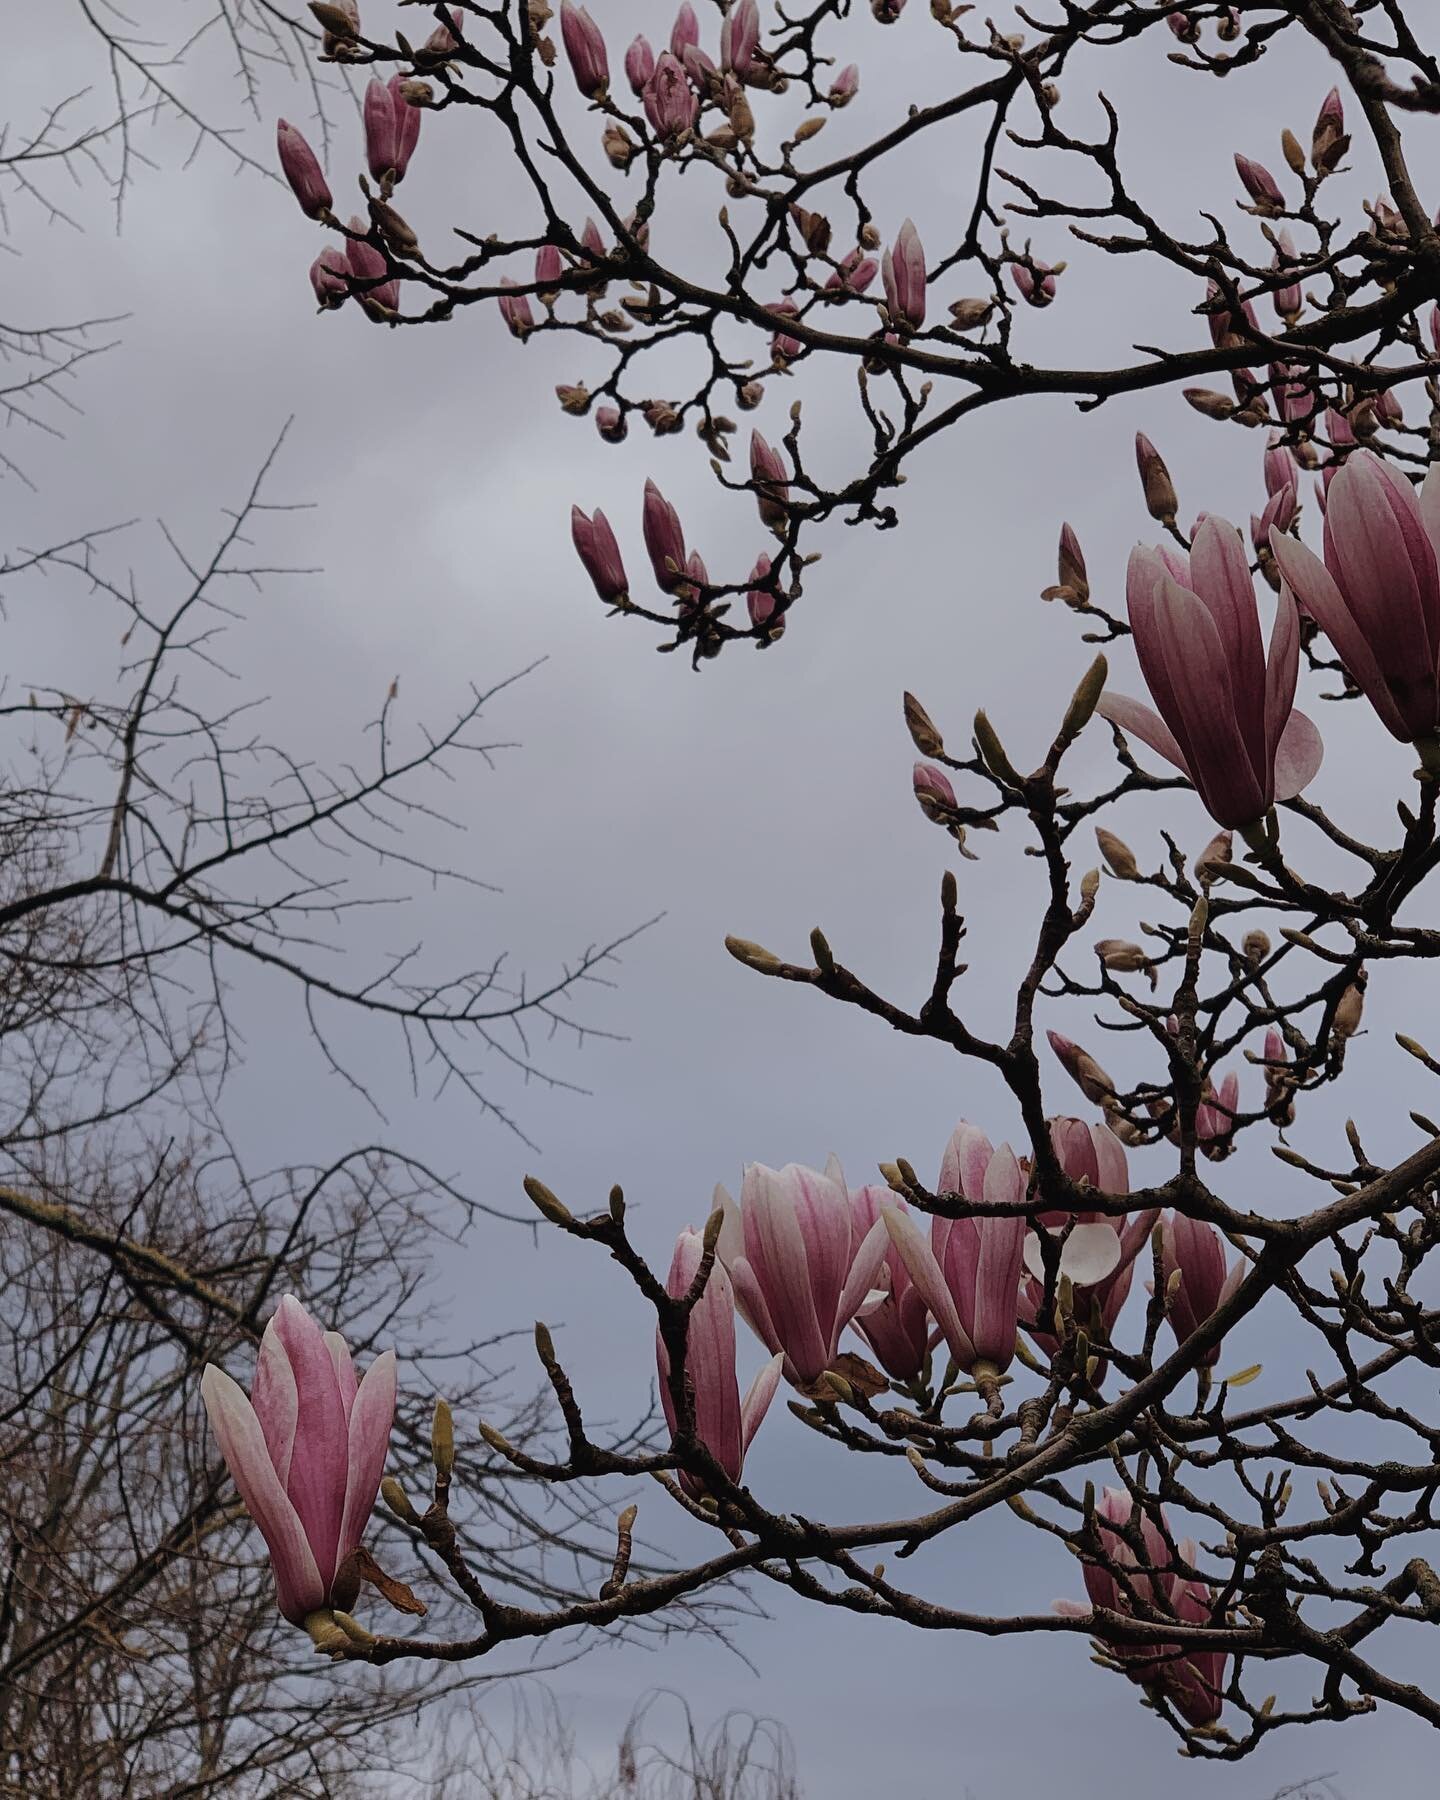 Hello Magnolias 🩷 Spring in Paris 🌸
.
.
.
.
.
#springinparis #springblooms #girltravel #travelparis #springiscoming #visitparis 
Paris springtime, Travel tips, Spring season, what to do in paris in spring, when to visit paris, magnolias in paris